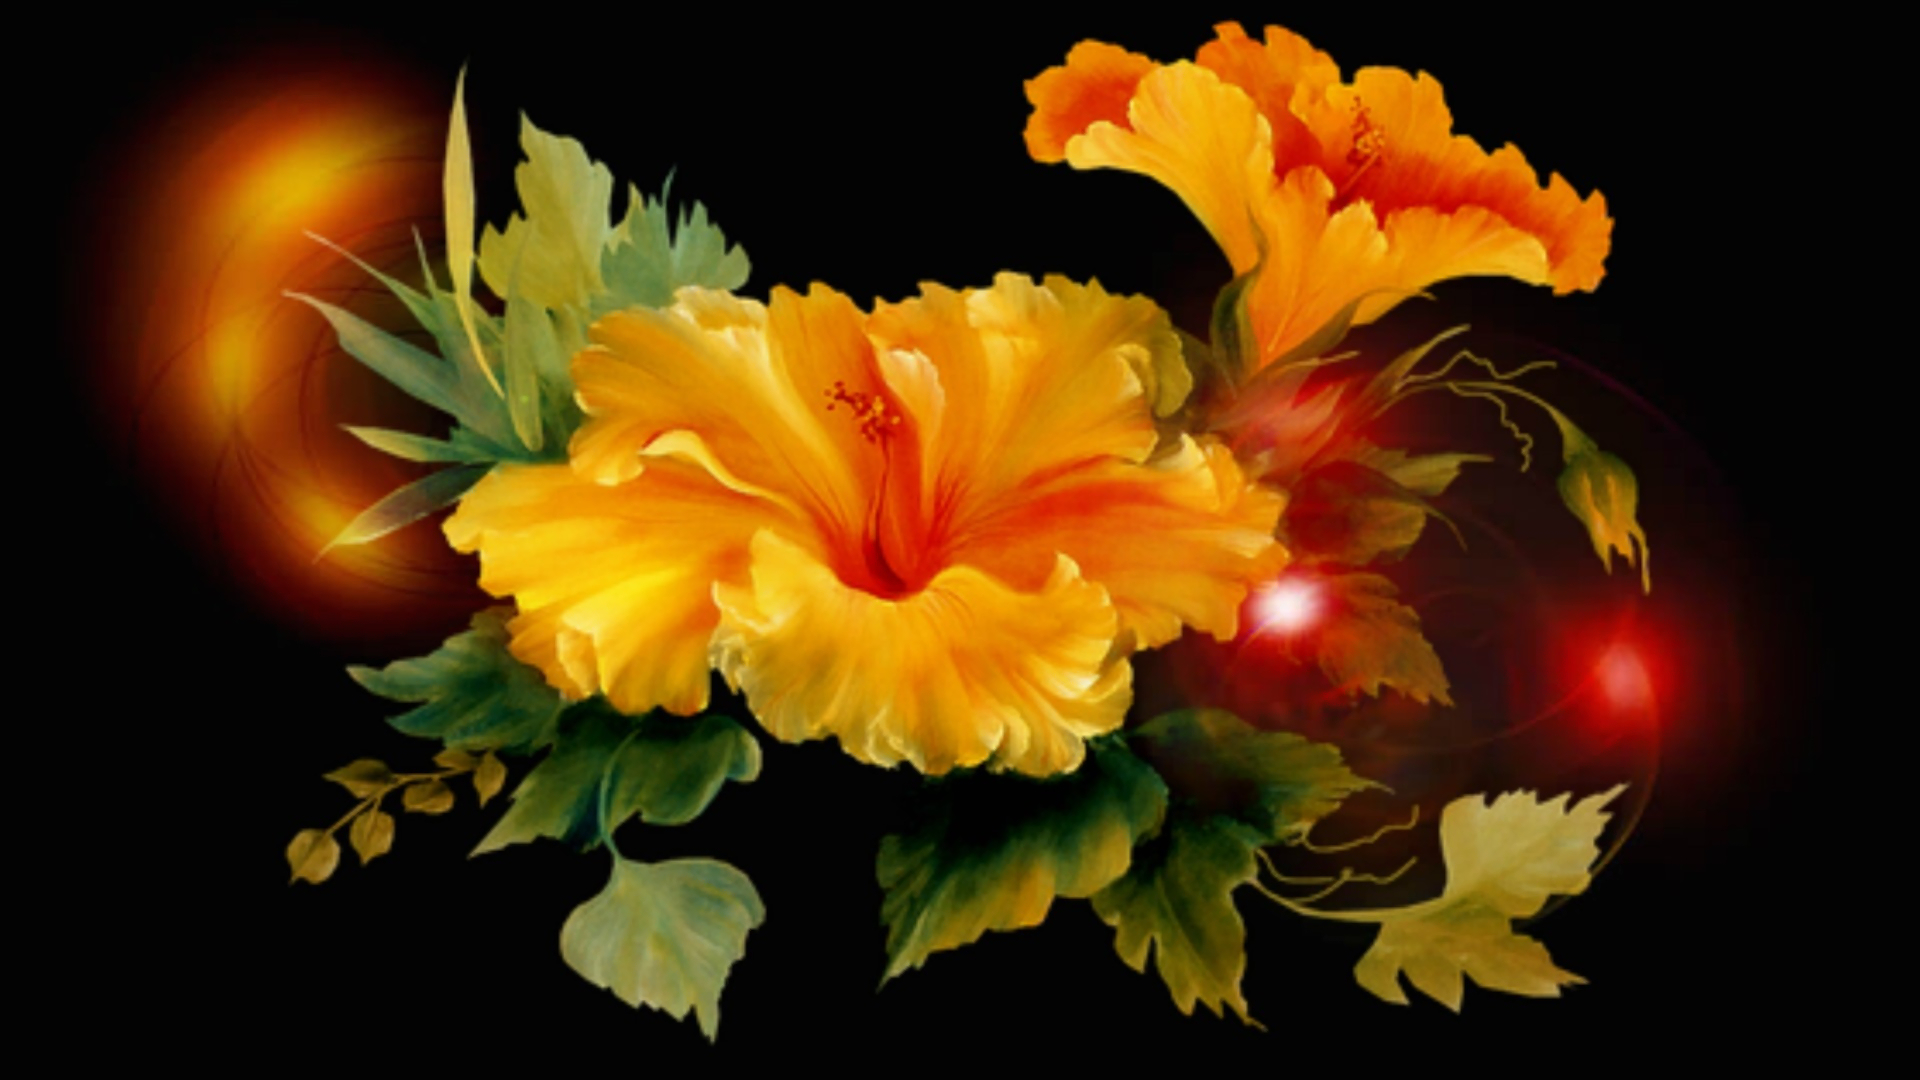 Artistic Flower Hibiscus Yellow Flower 1920x1080